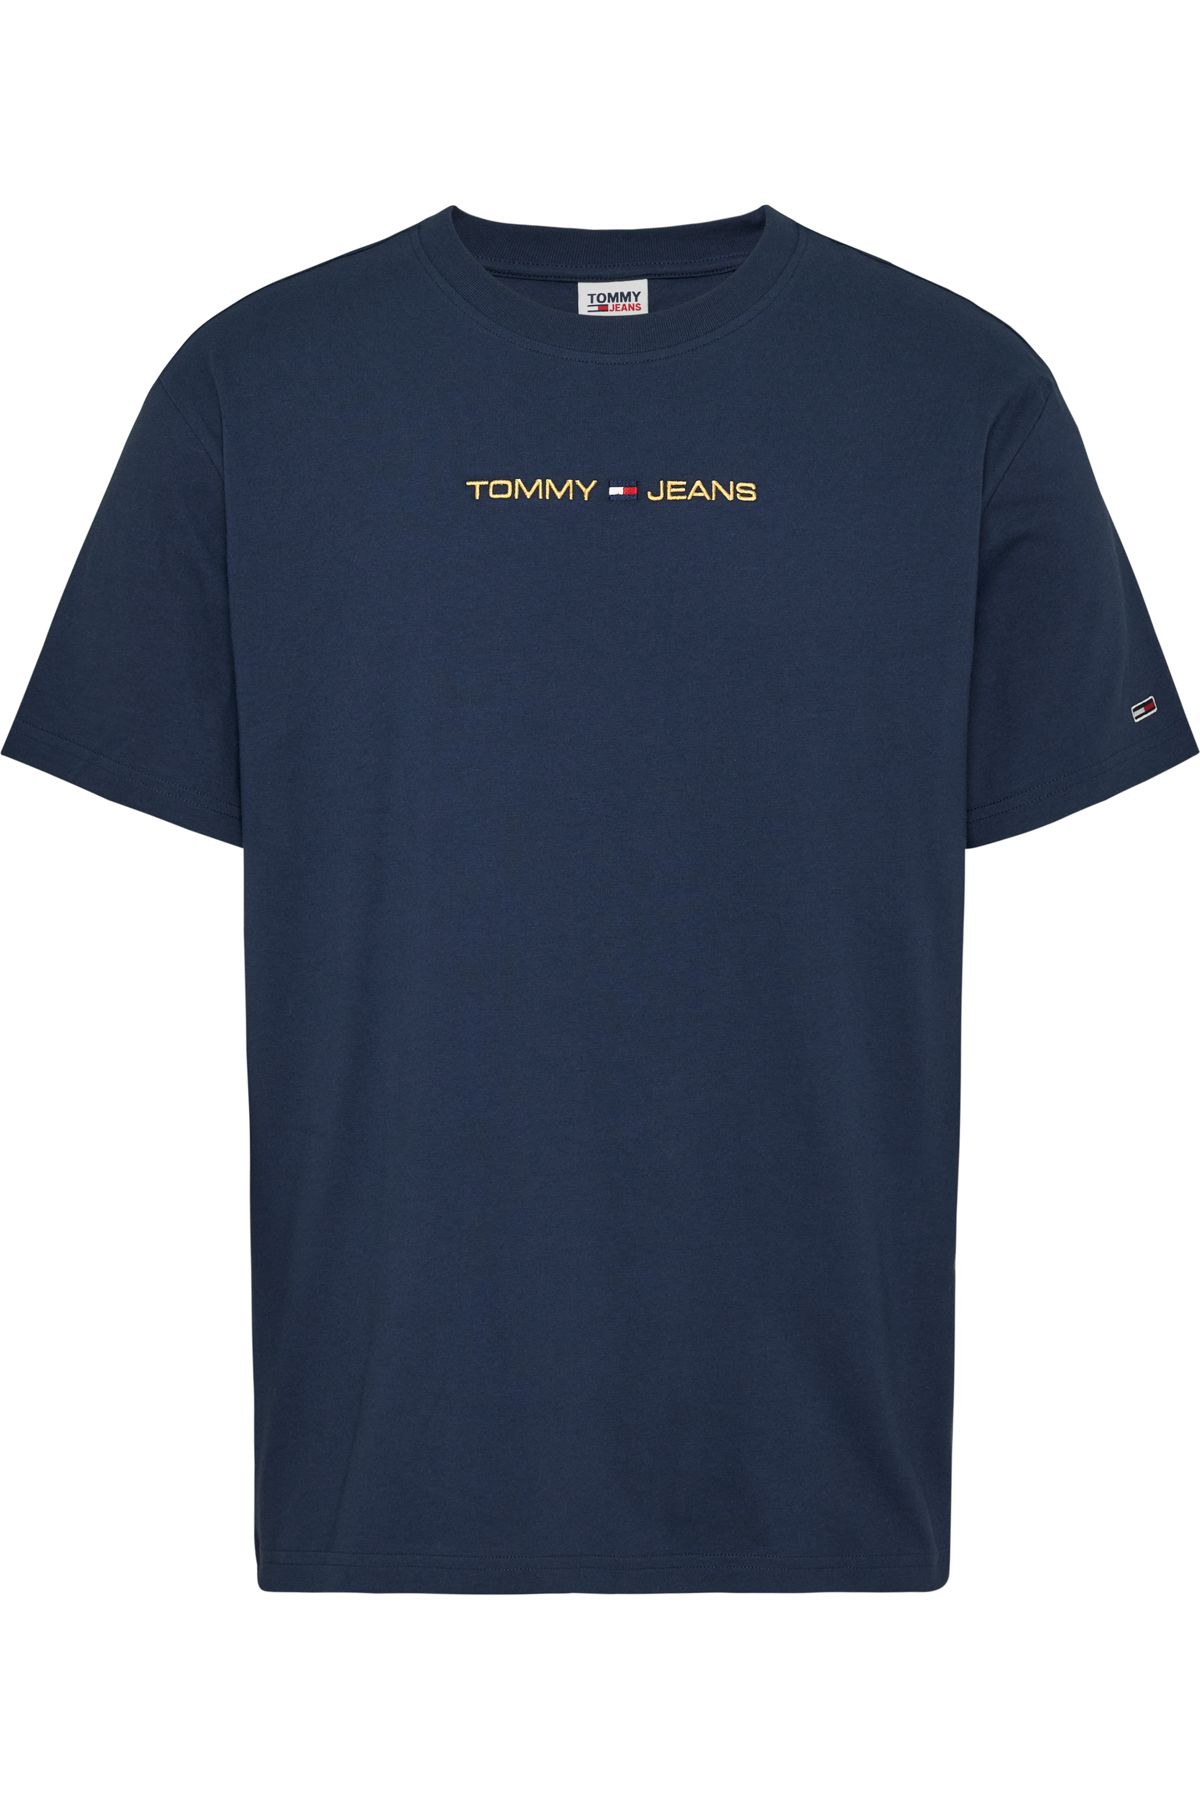 Tommy Hilfiger Twilight T-Shirt Navy Trendyol Herren 